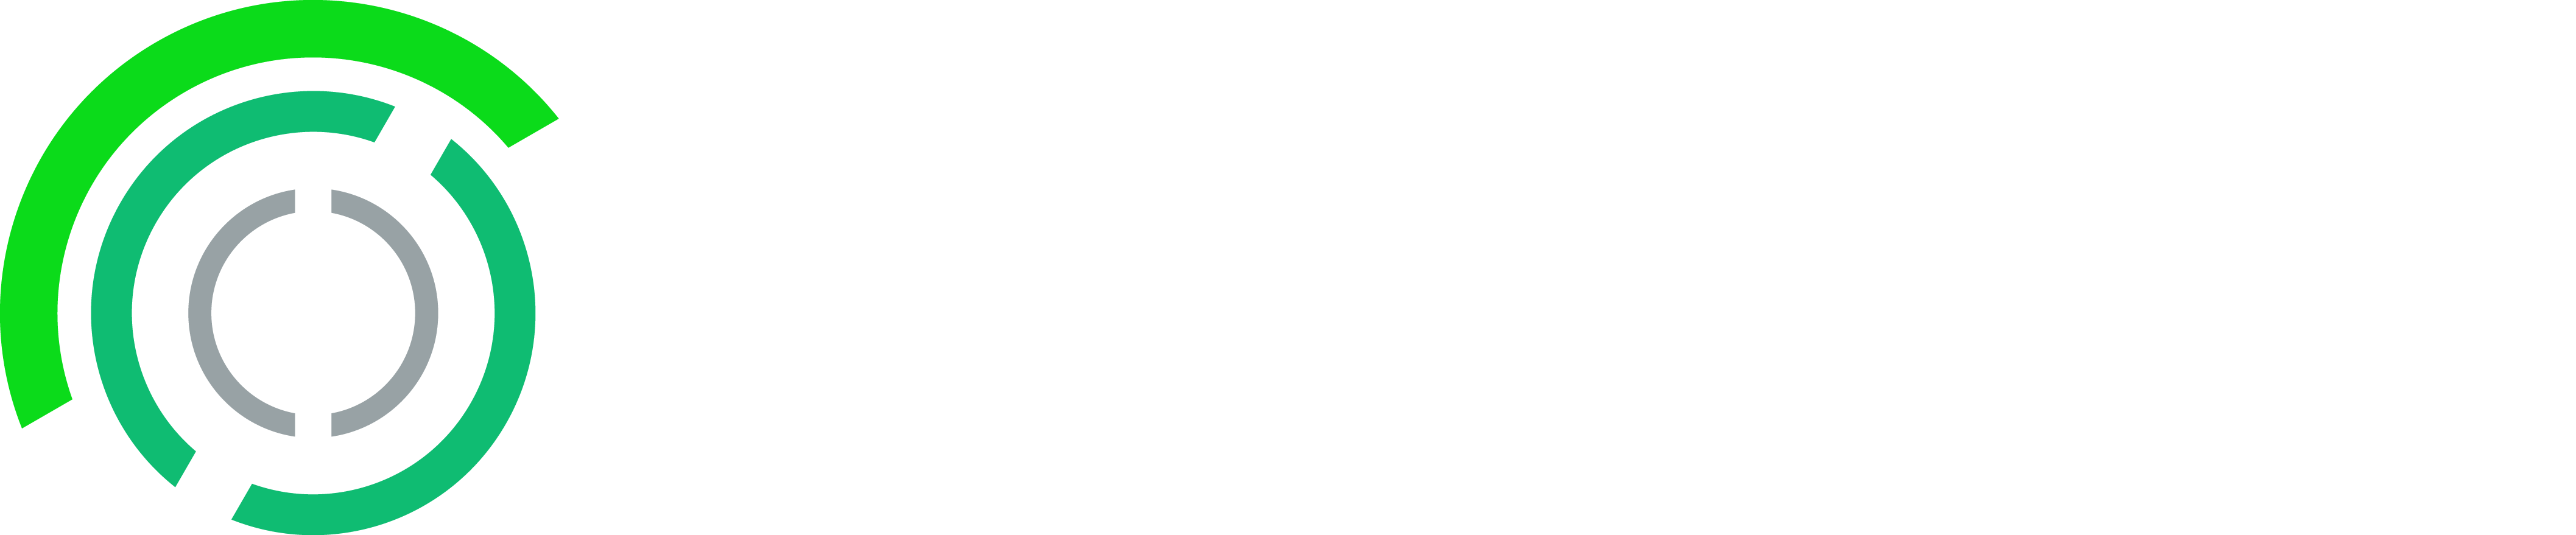 DRBS LLC